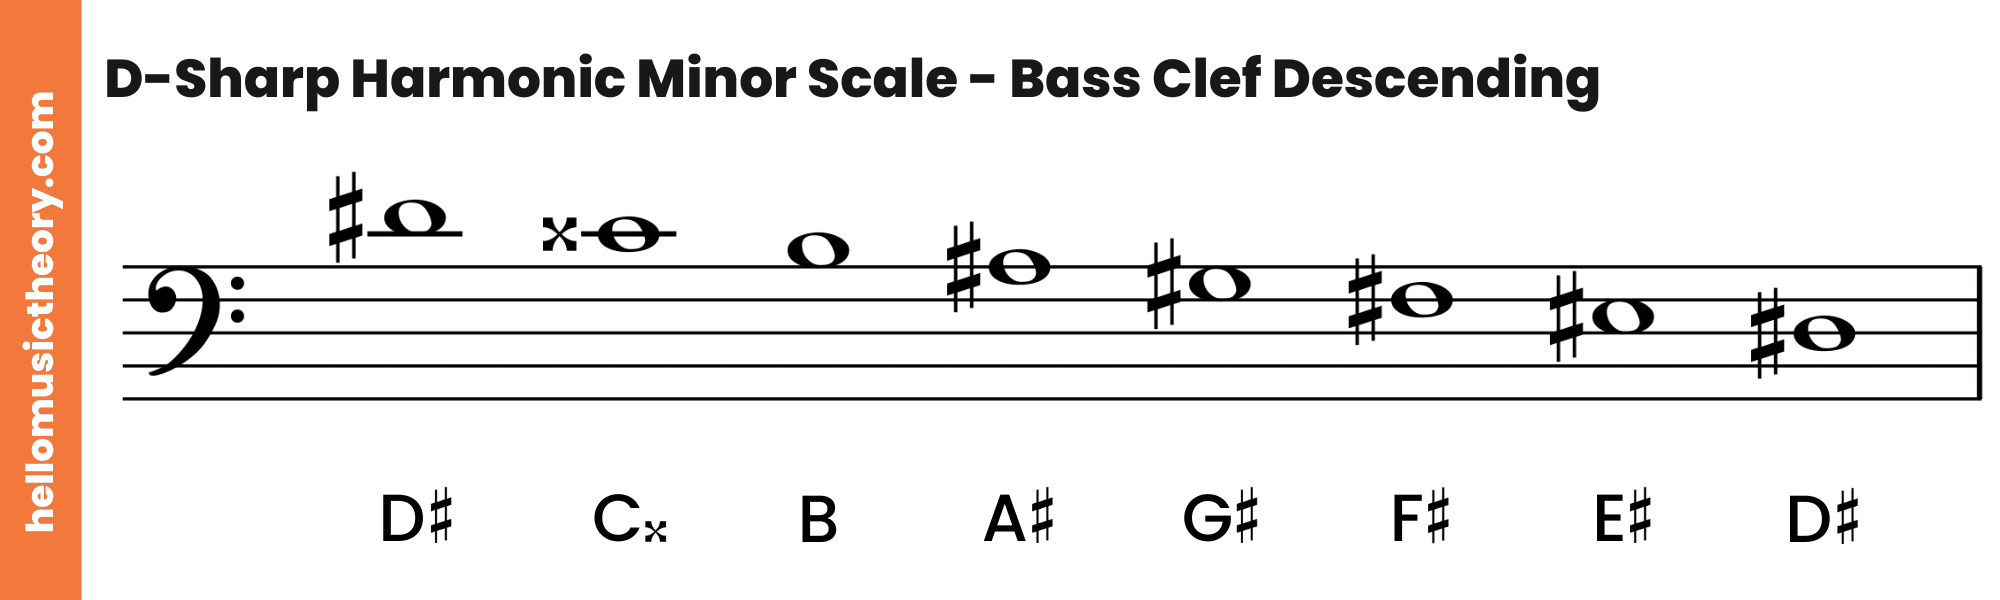 D-Sharp Harmonic Minor Scale Bass Clef Descending